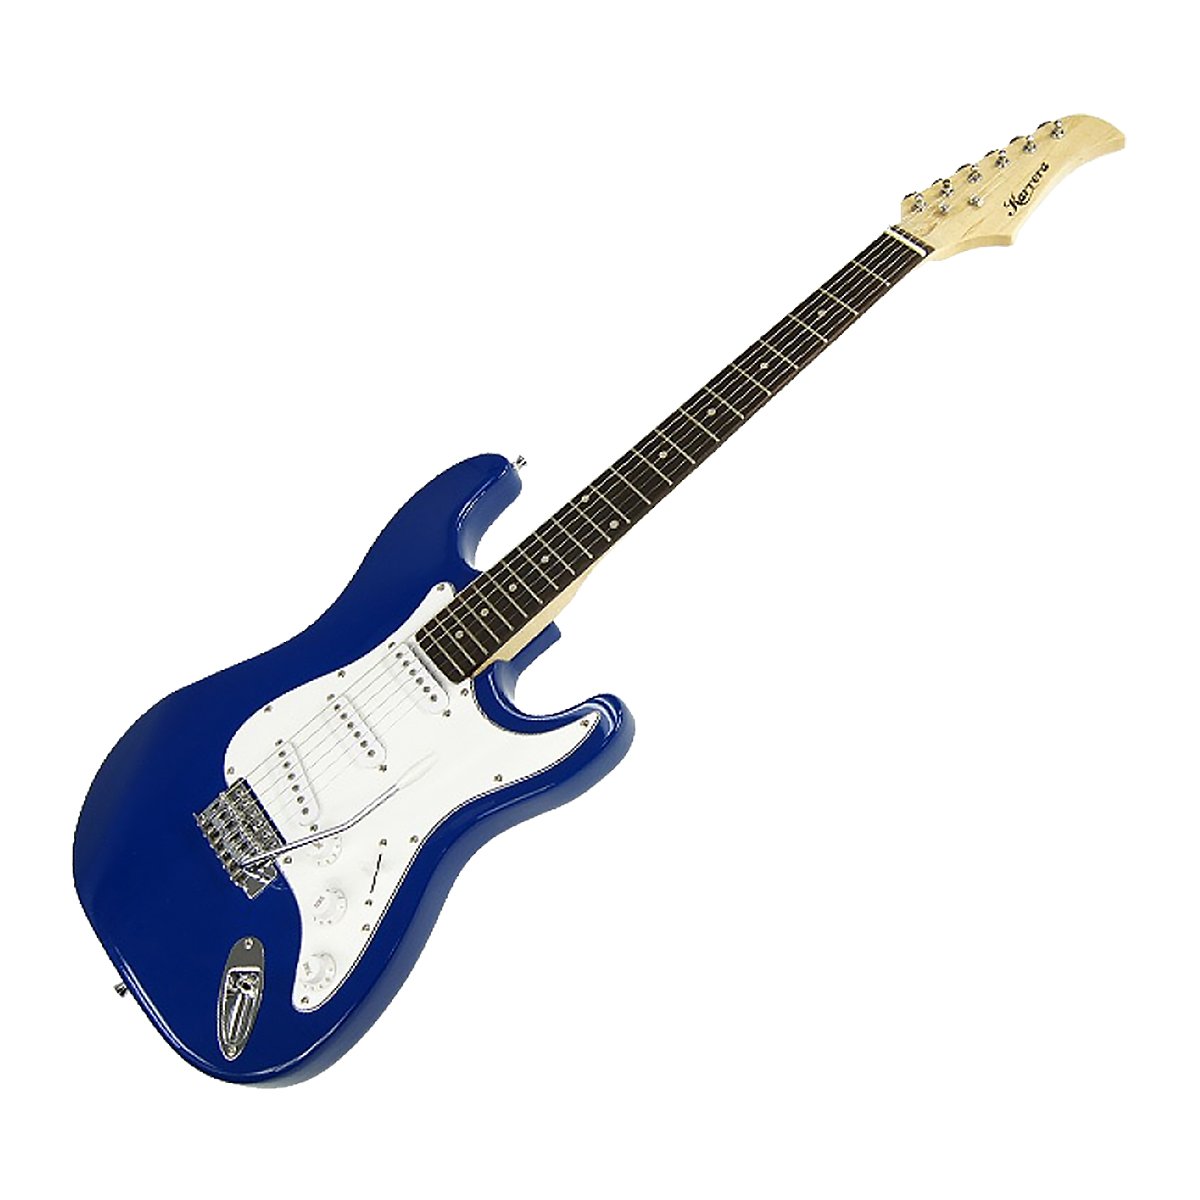 Karrera 39in Electric Guitar - Blue - SILBERSHELL